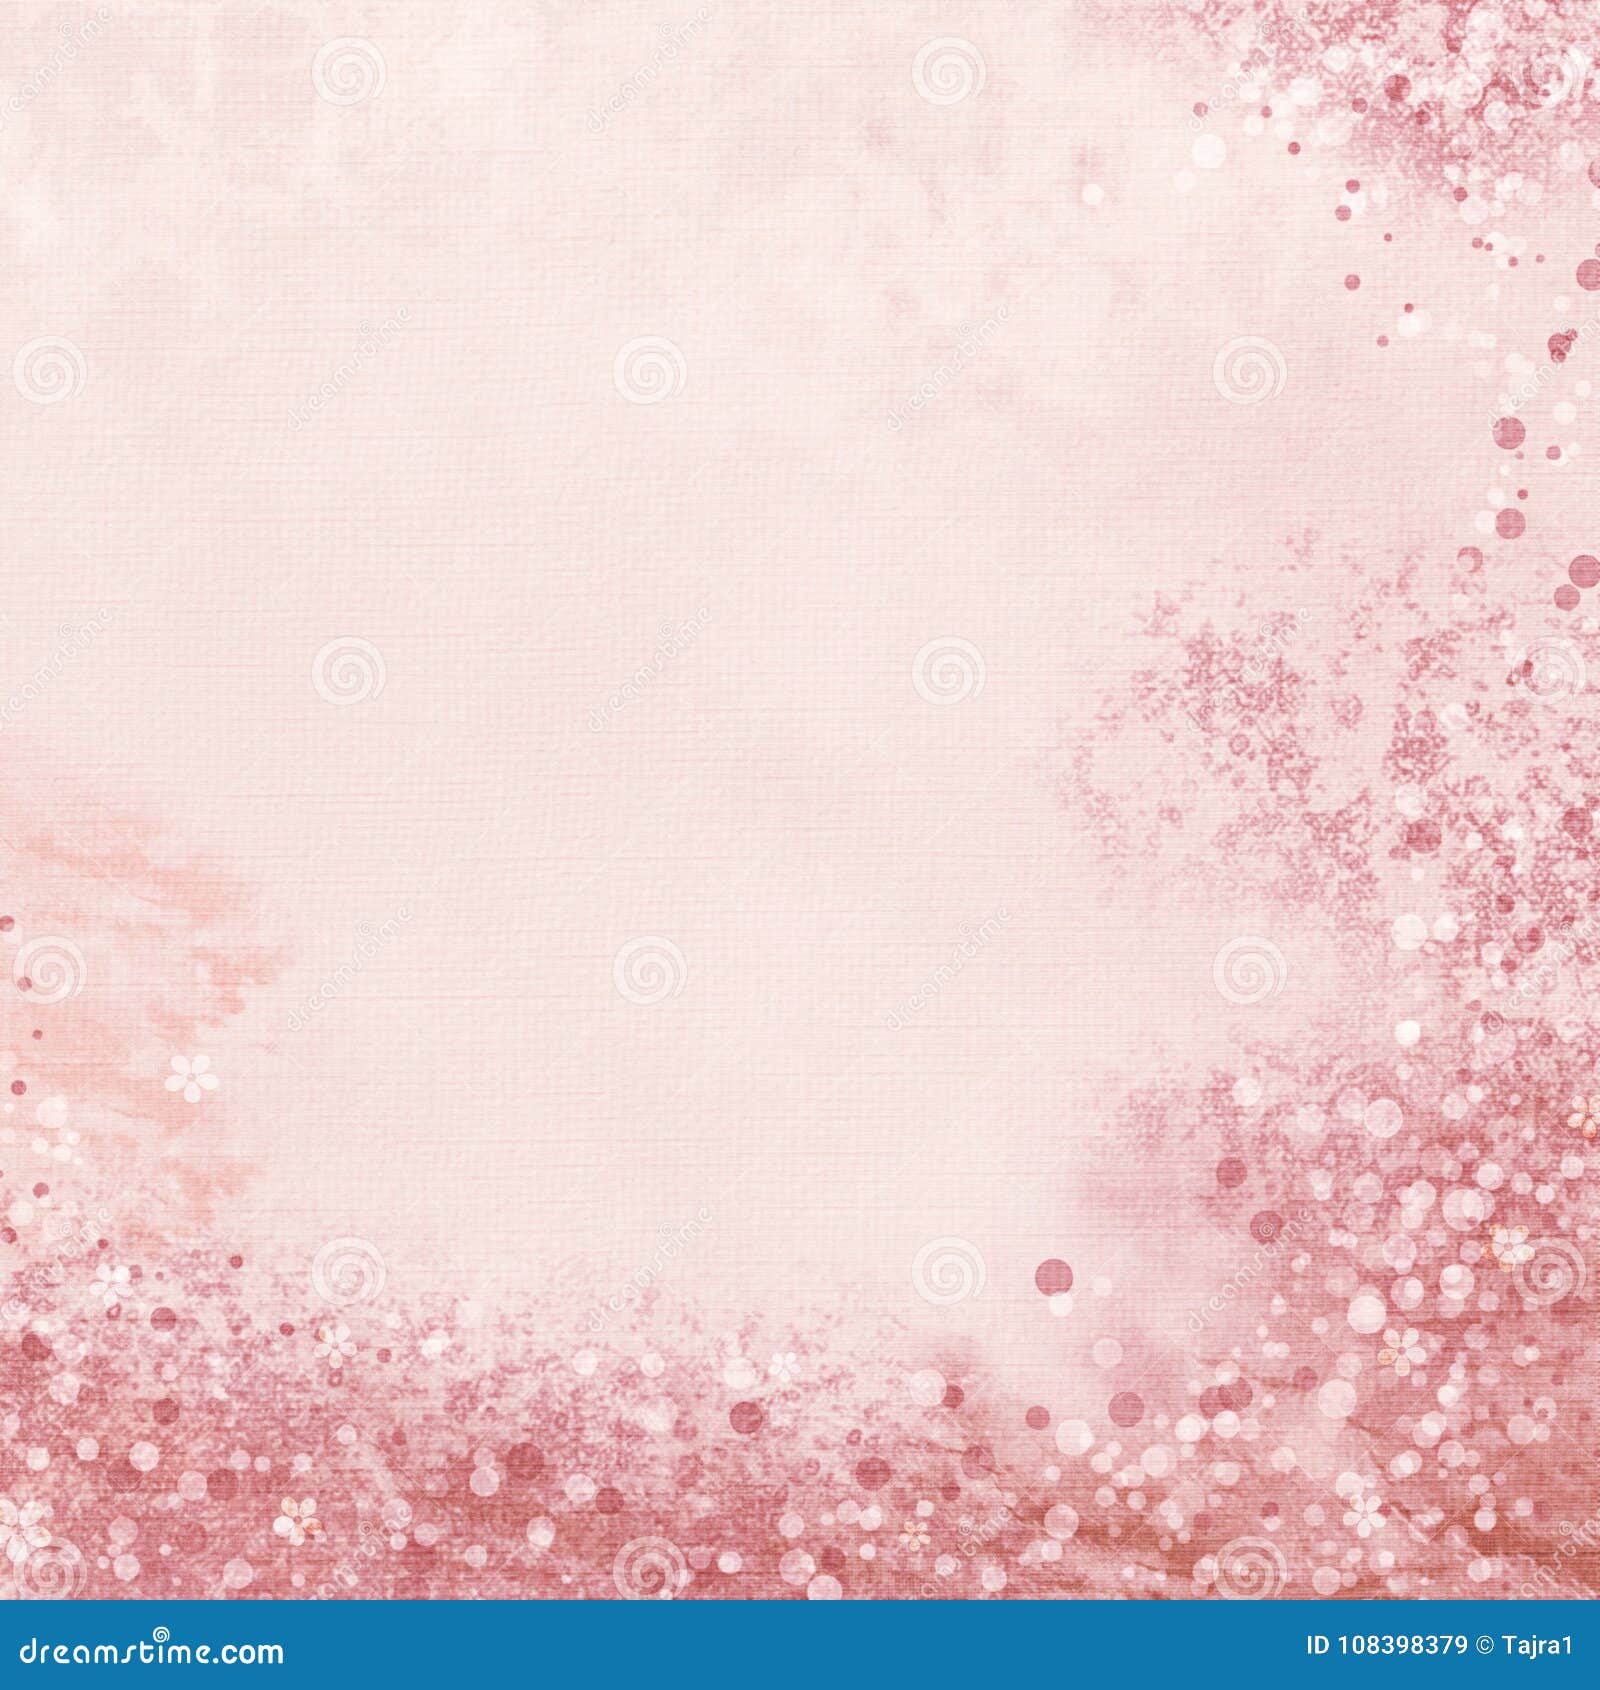 pink abstrackt textured background